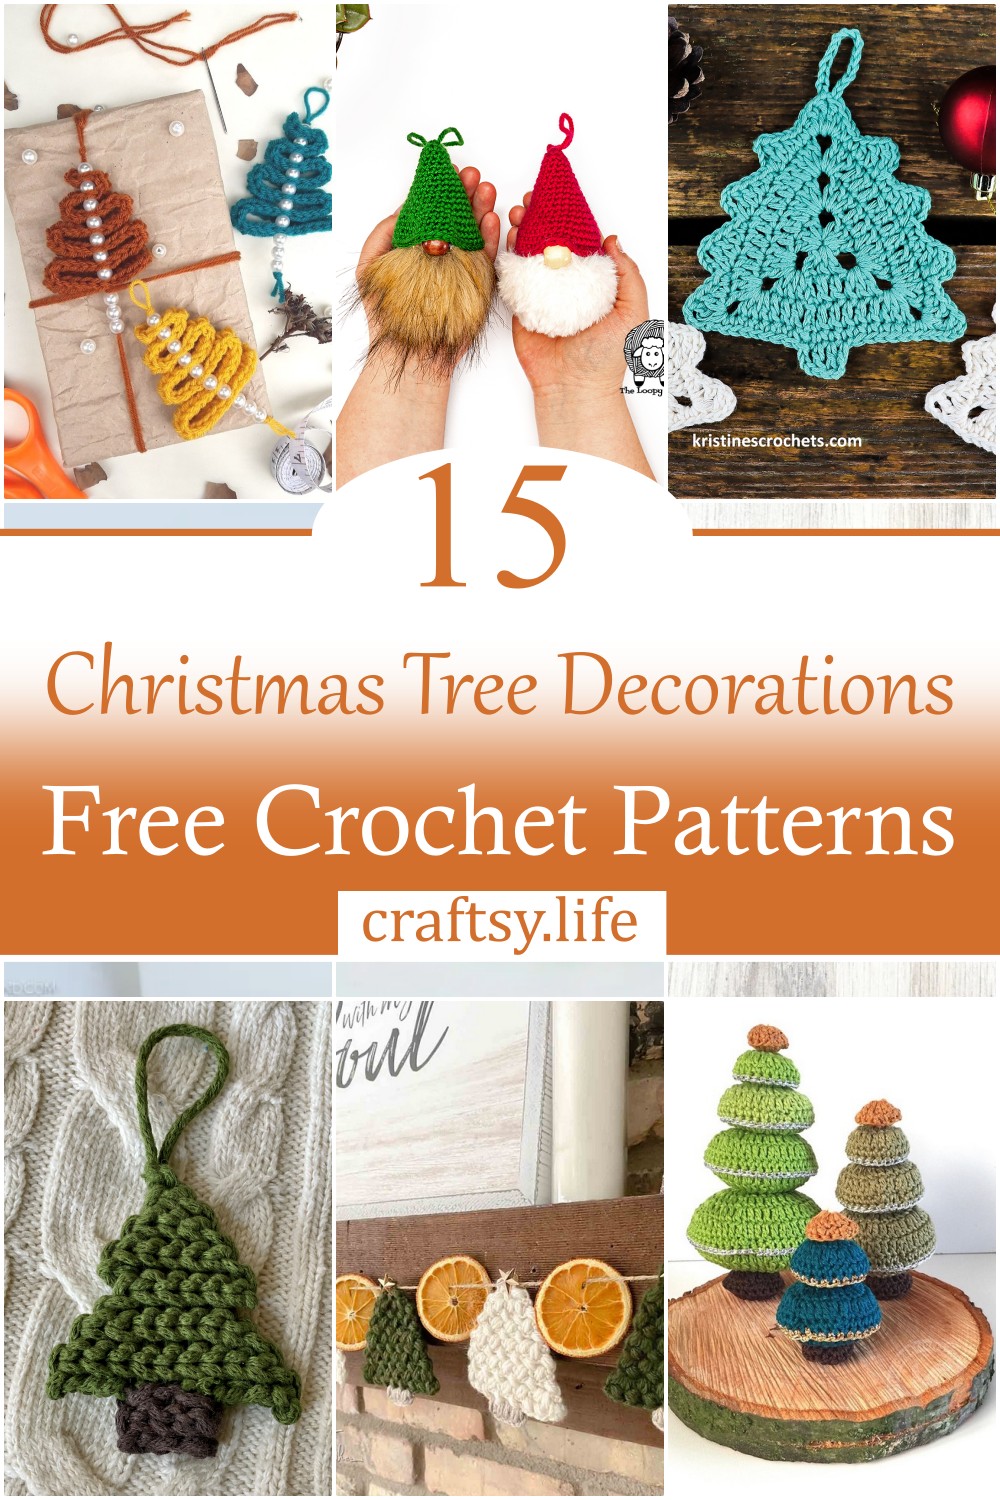 Crochet Christmas Tree Decorations 2